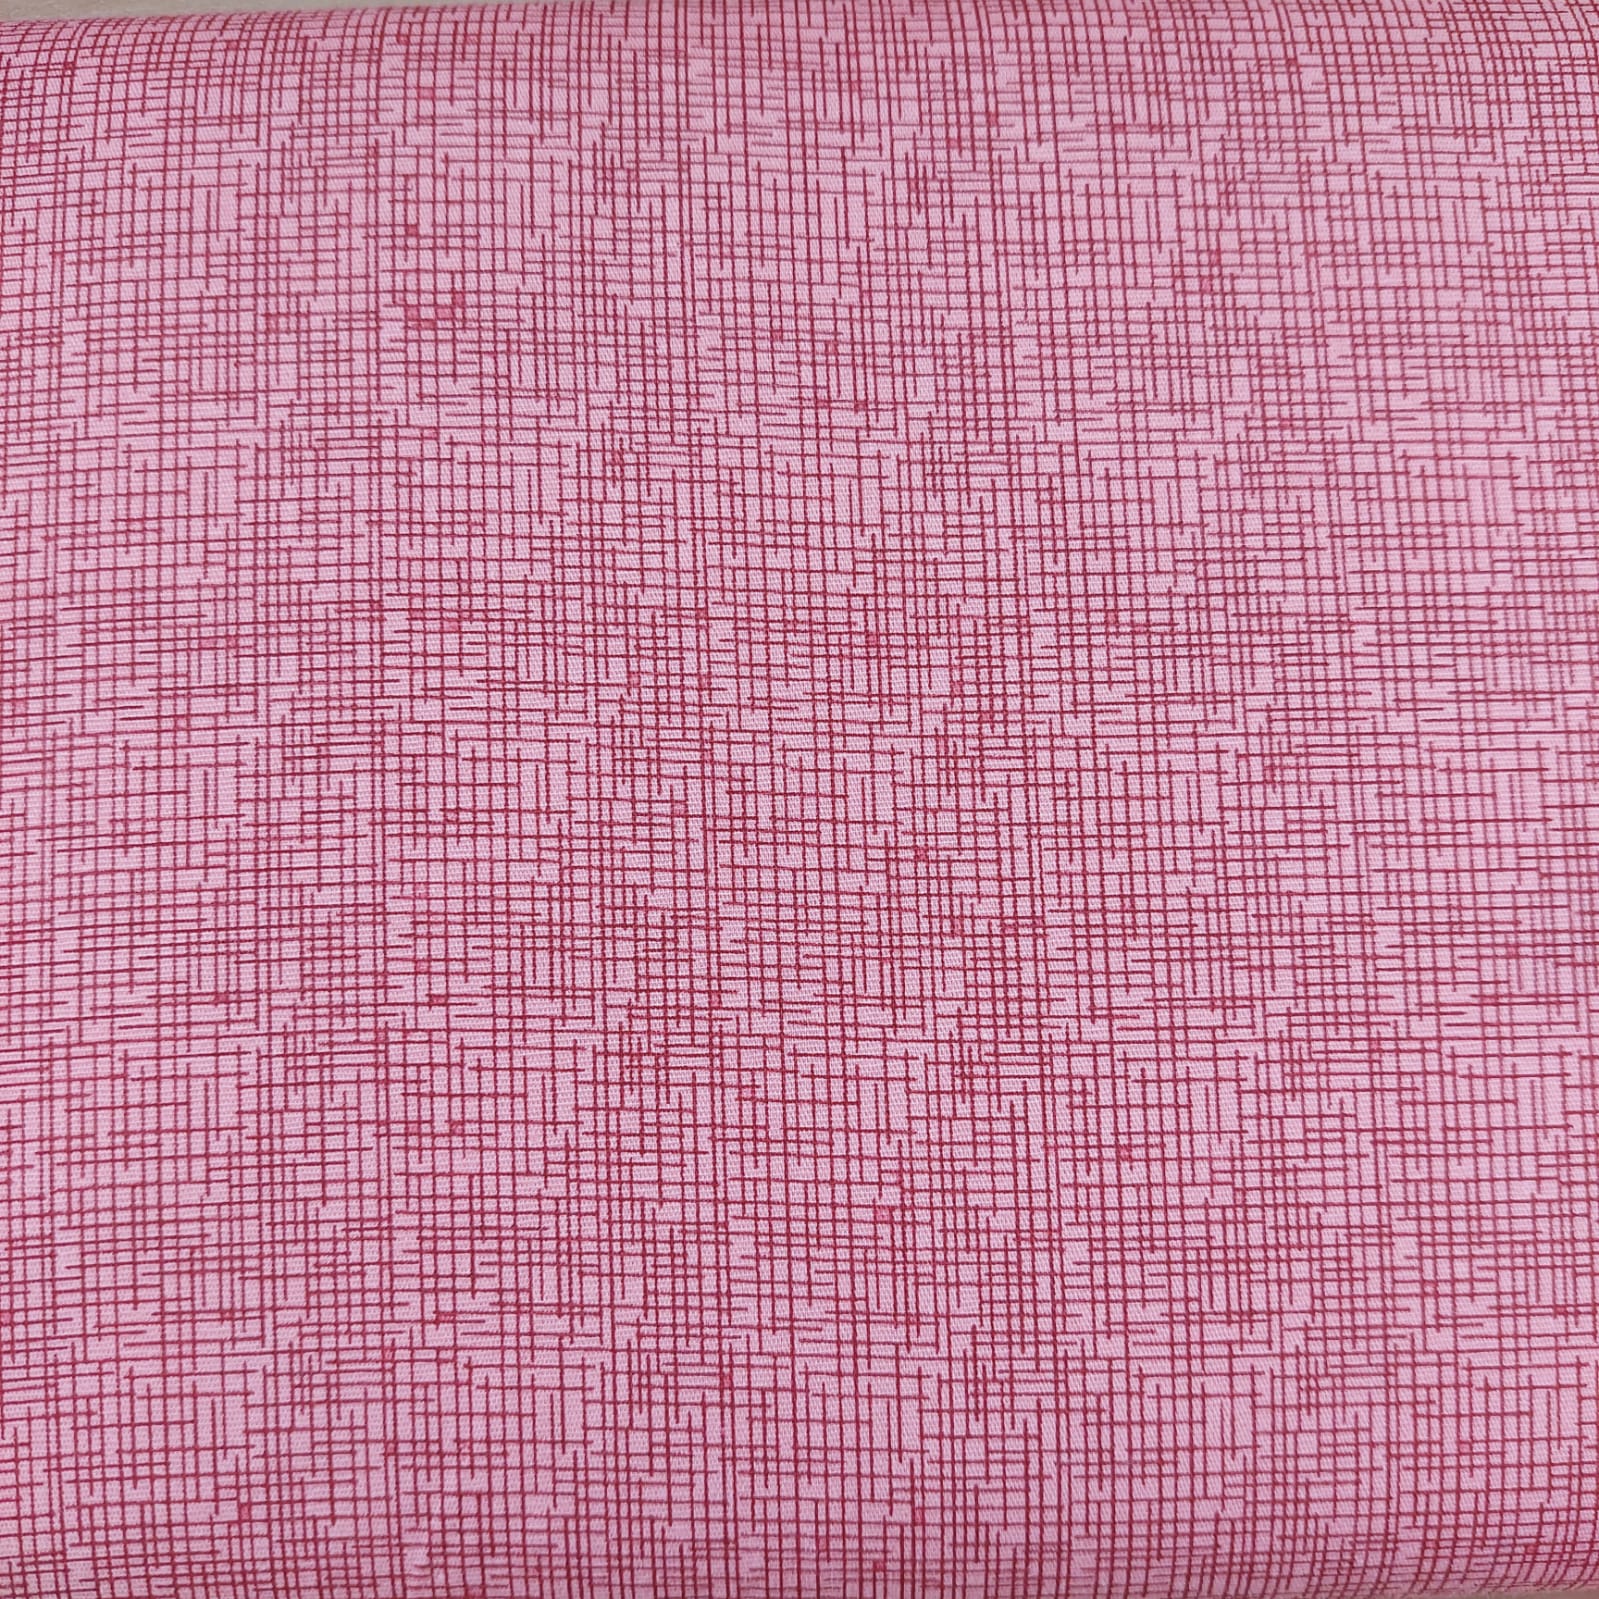 Tecido Tricoline  - textura goiaba - Fuxicos e Fricotes  (50x1,50cm)             